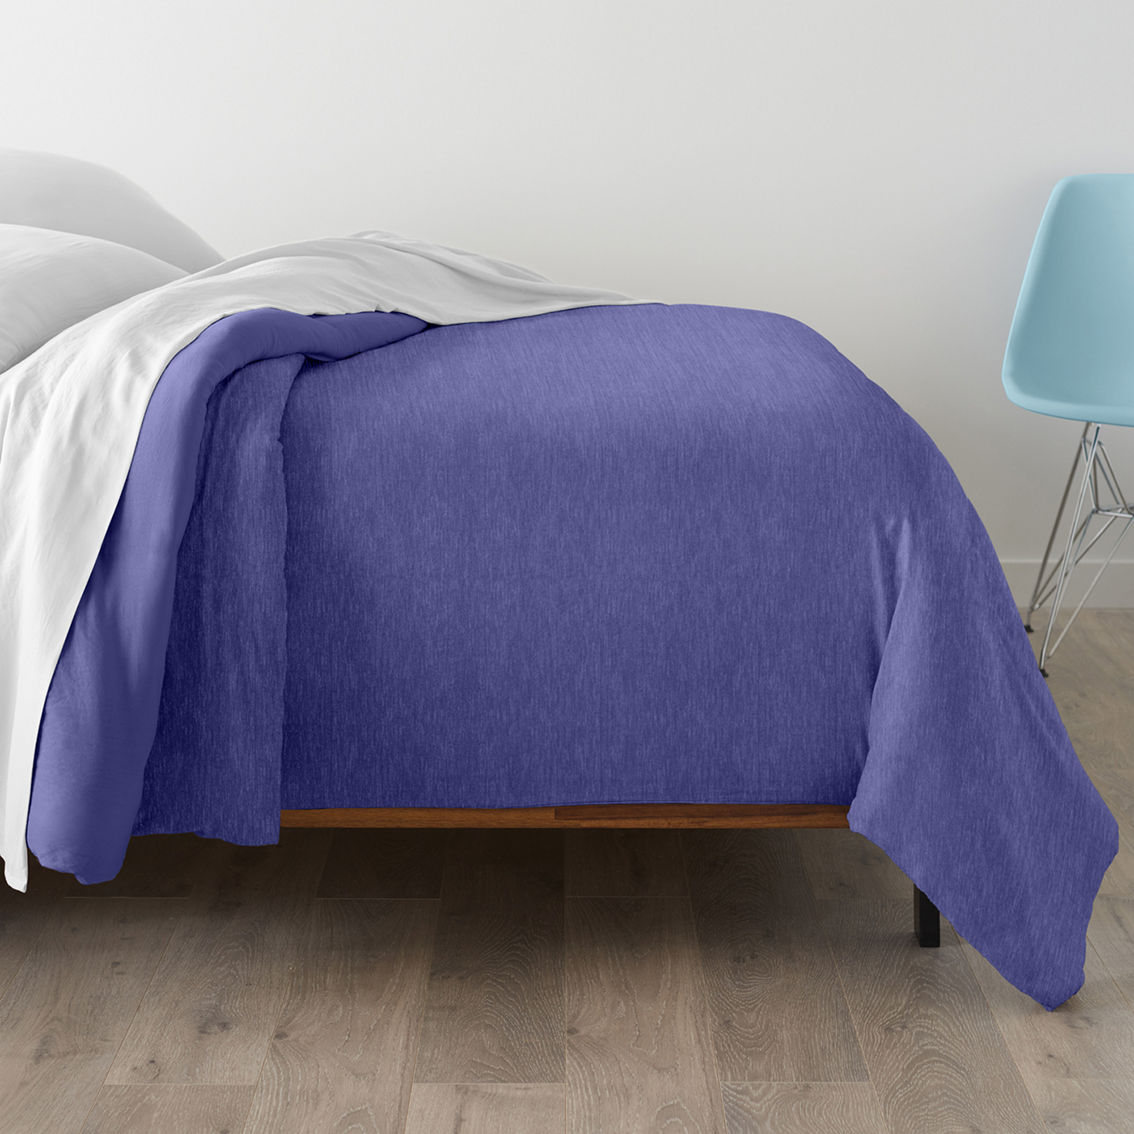 Ella Jayne Cooling Jersey Fabric Down Alternative Comforter - Image 5 of 6